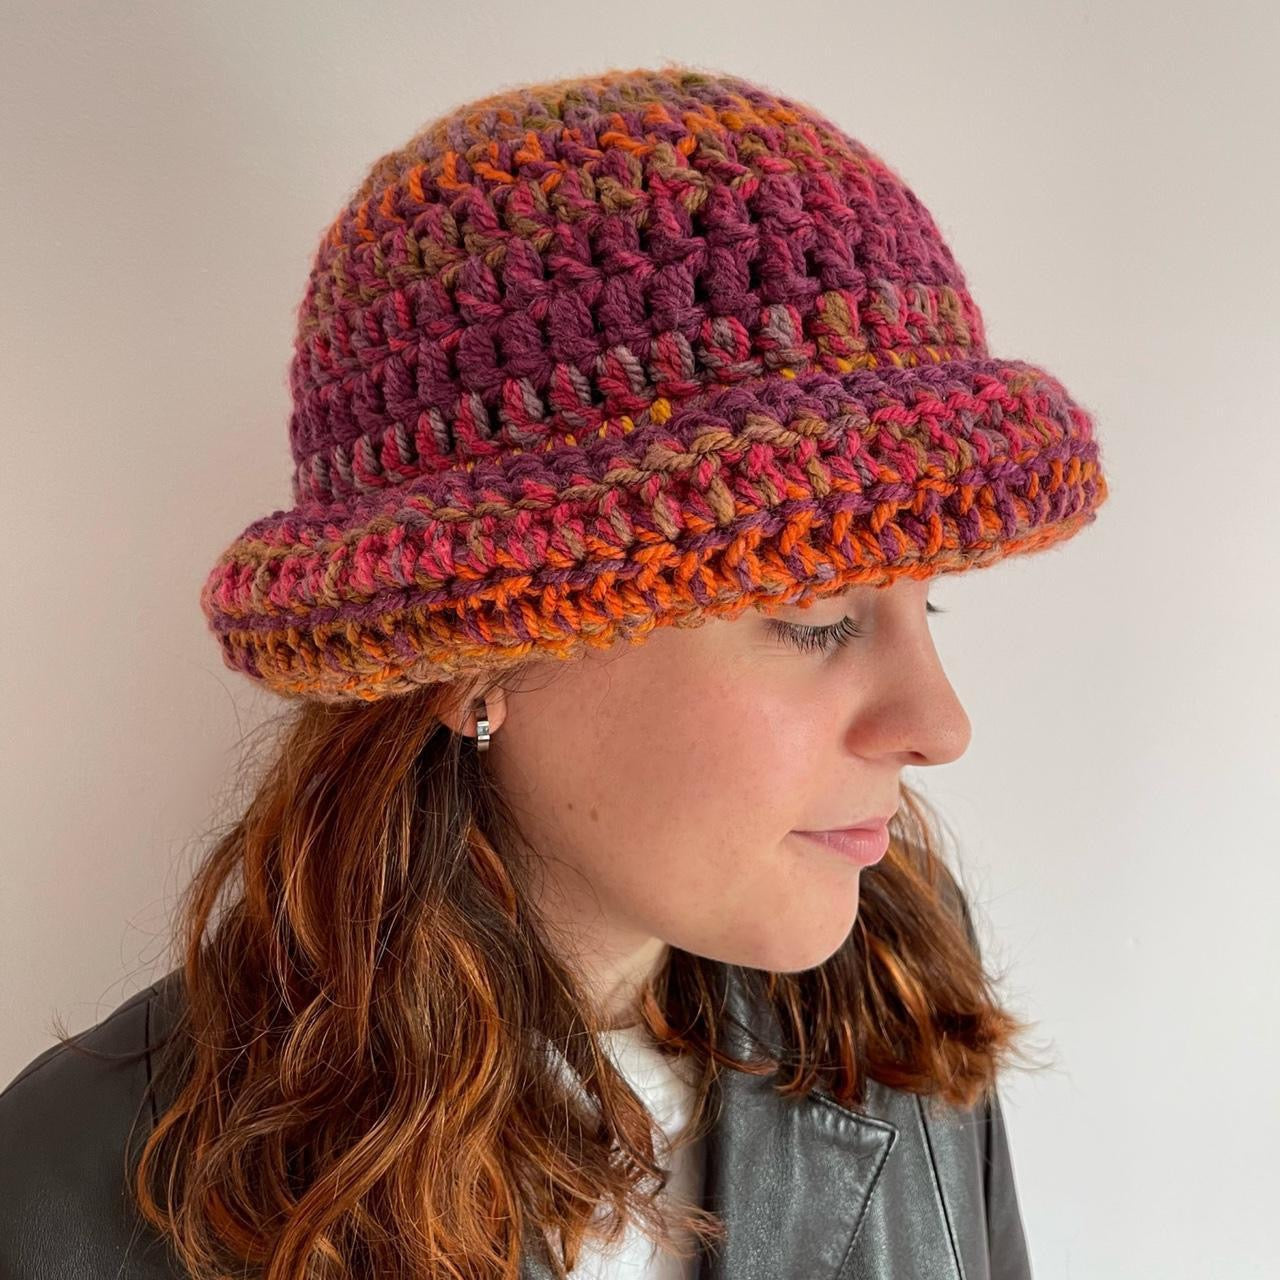 Handmade chunky multicoloured crochet bowler hat - choose your colour